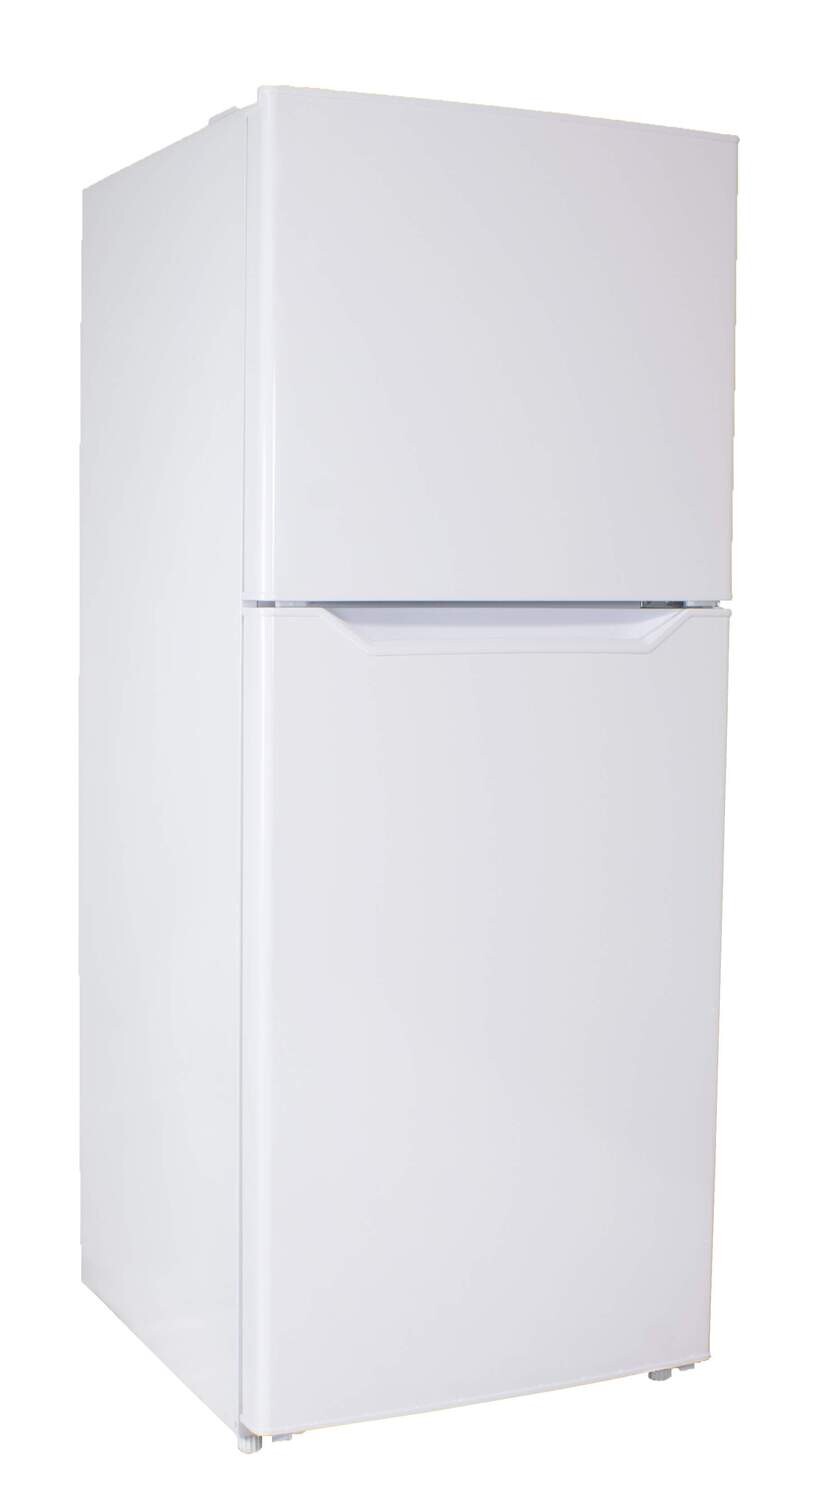 Danby 10.1 cu. ft. Apartment Size Refrigerator (DFF101B1WDB)